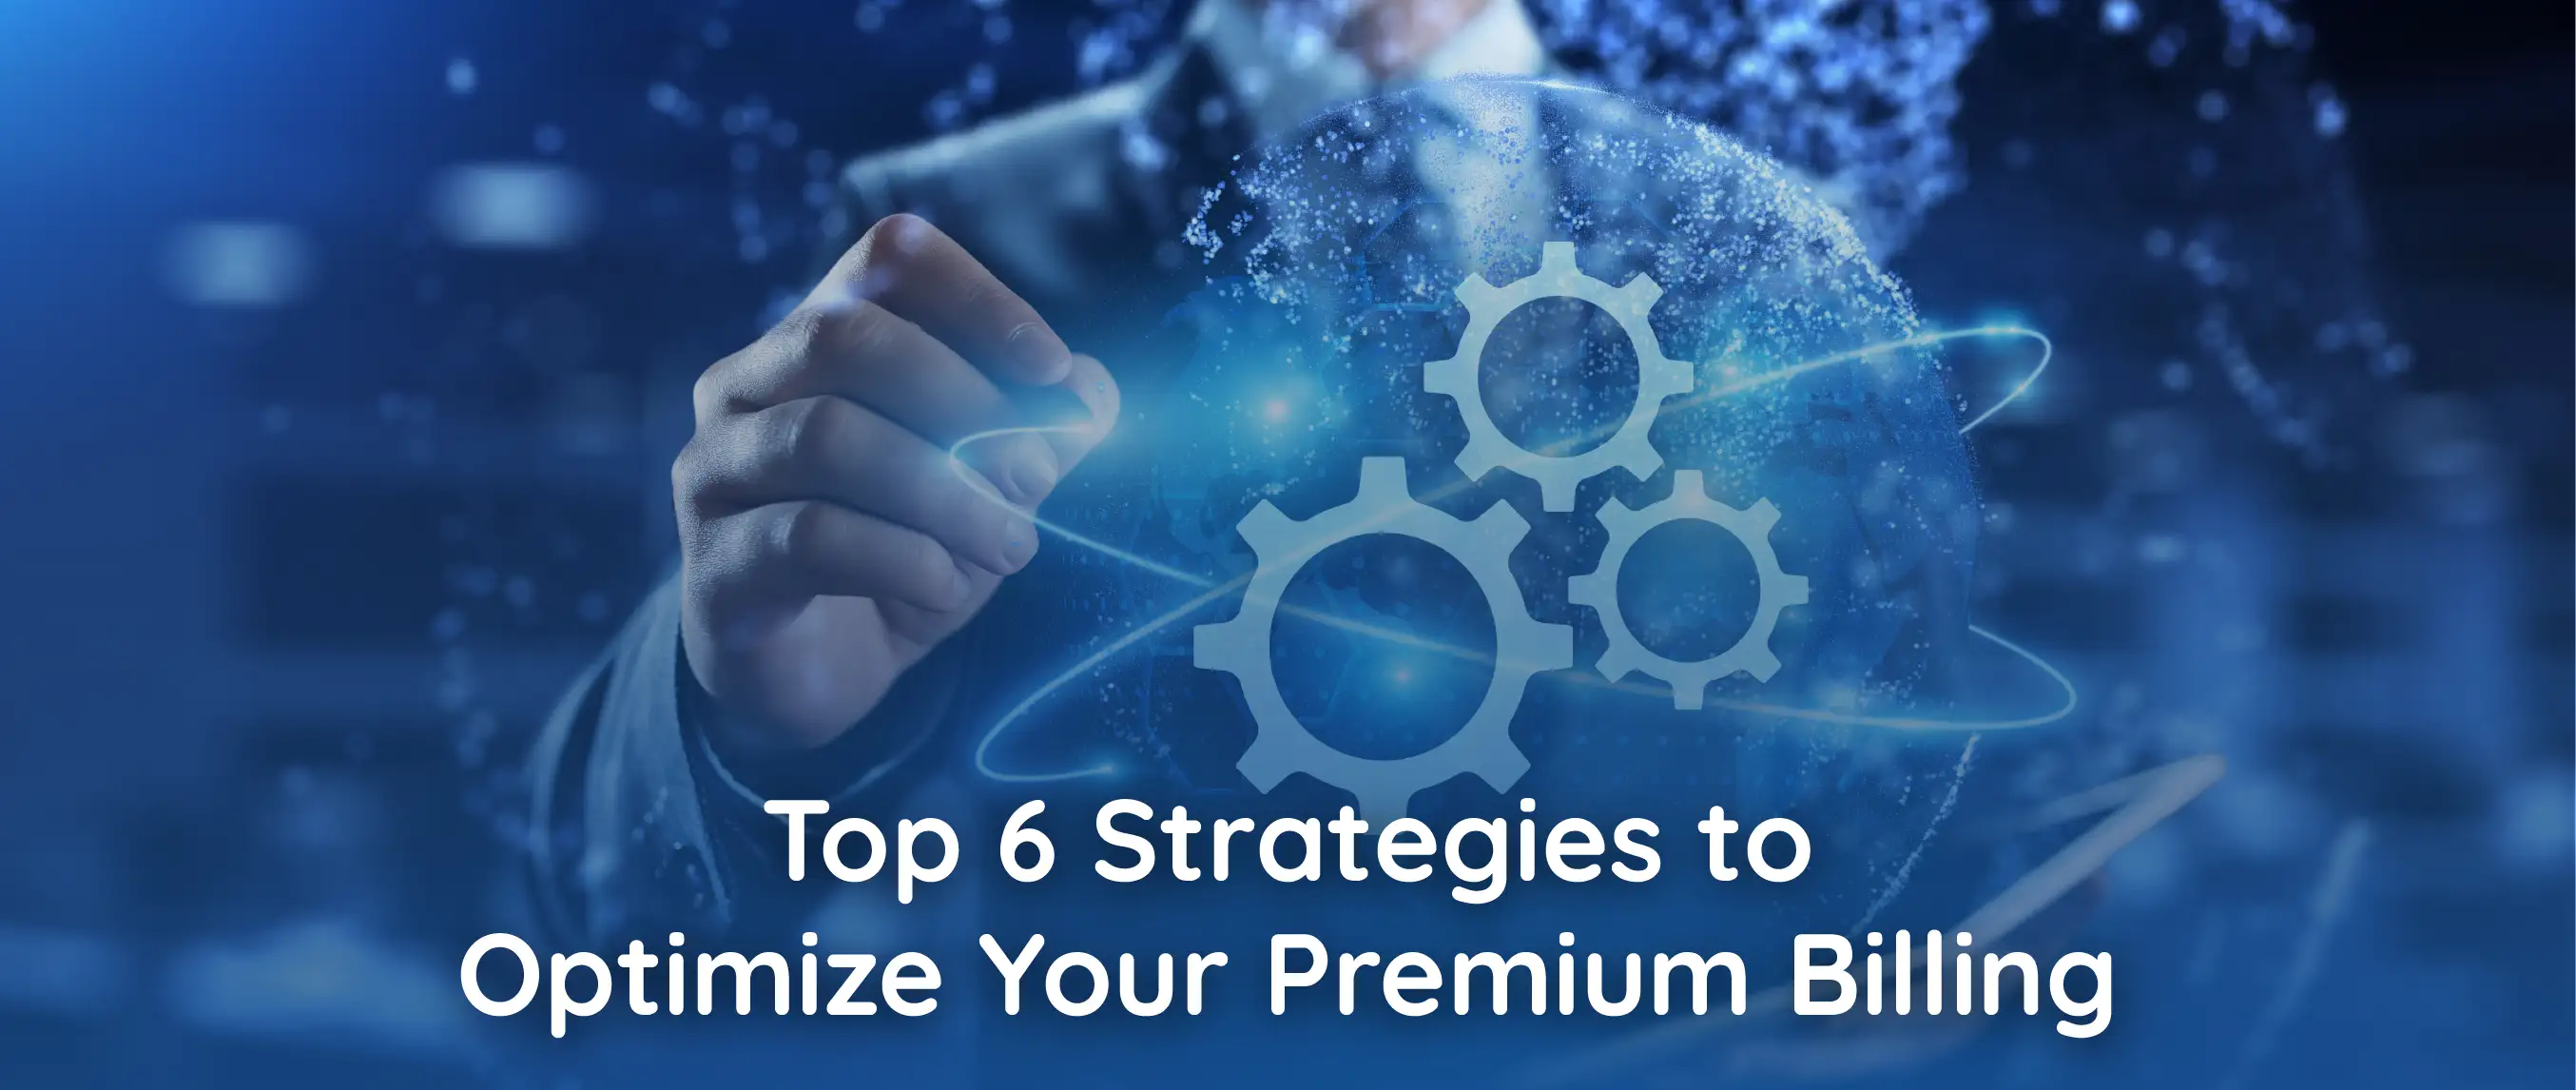 Top 6 Strategies to Optimize Your Premium Billing